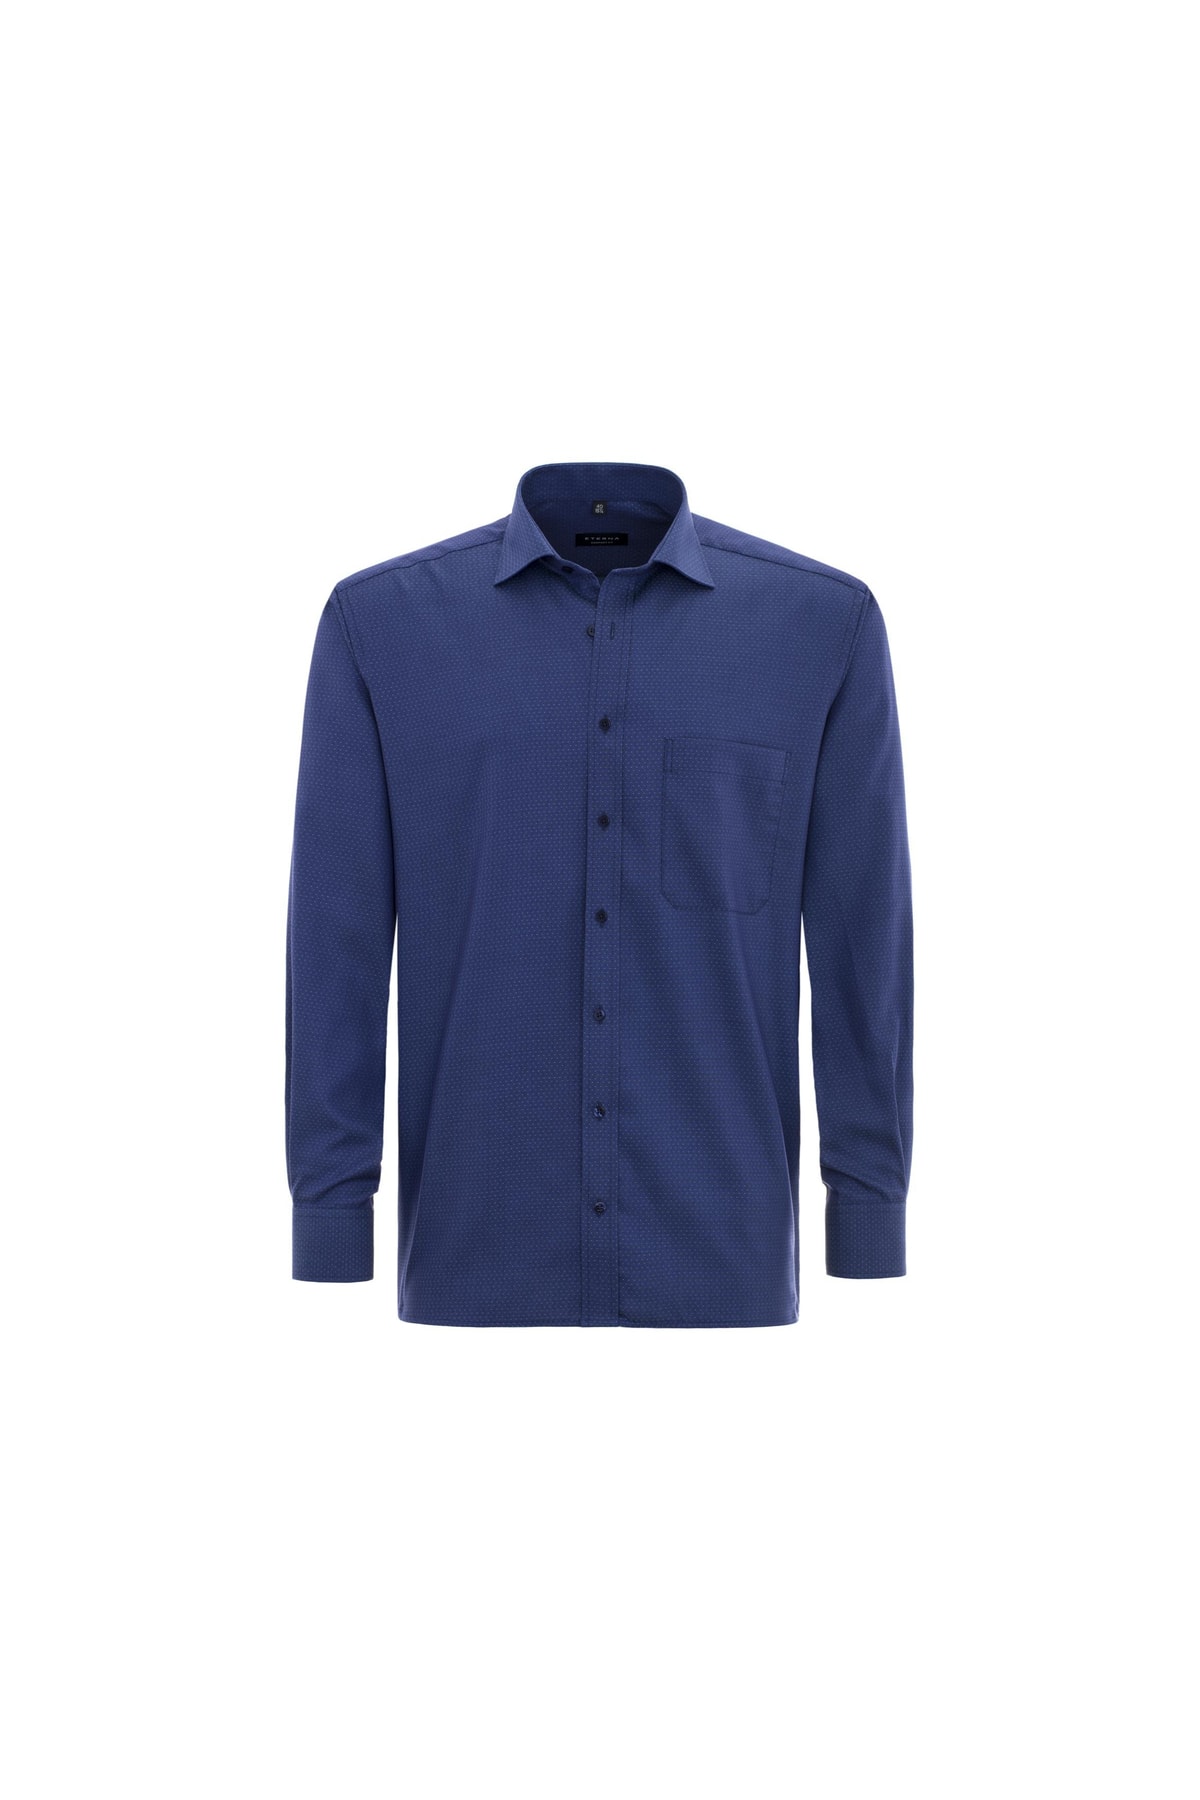 ETERNA Hemd Blau Regular Fit Fast ausverkauft